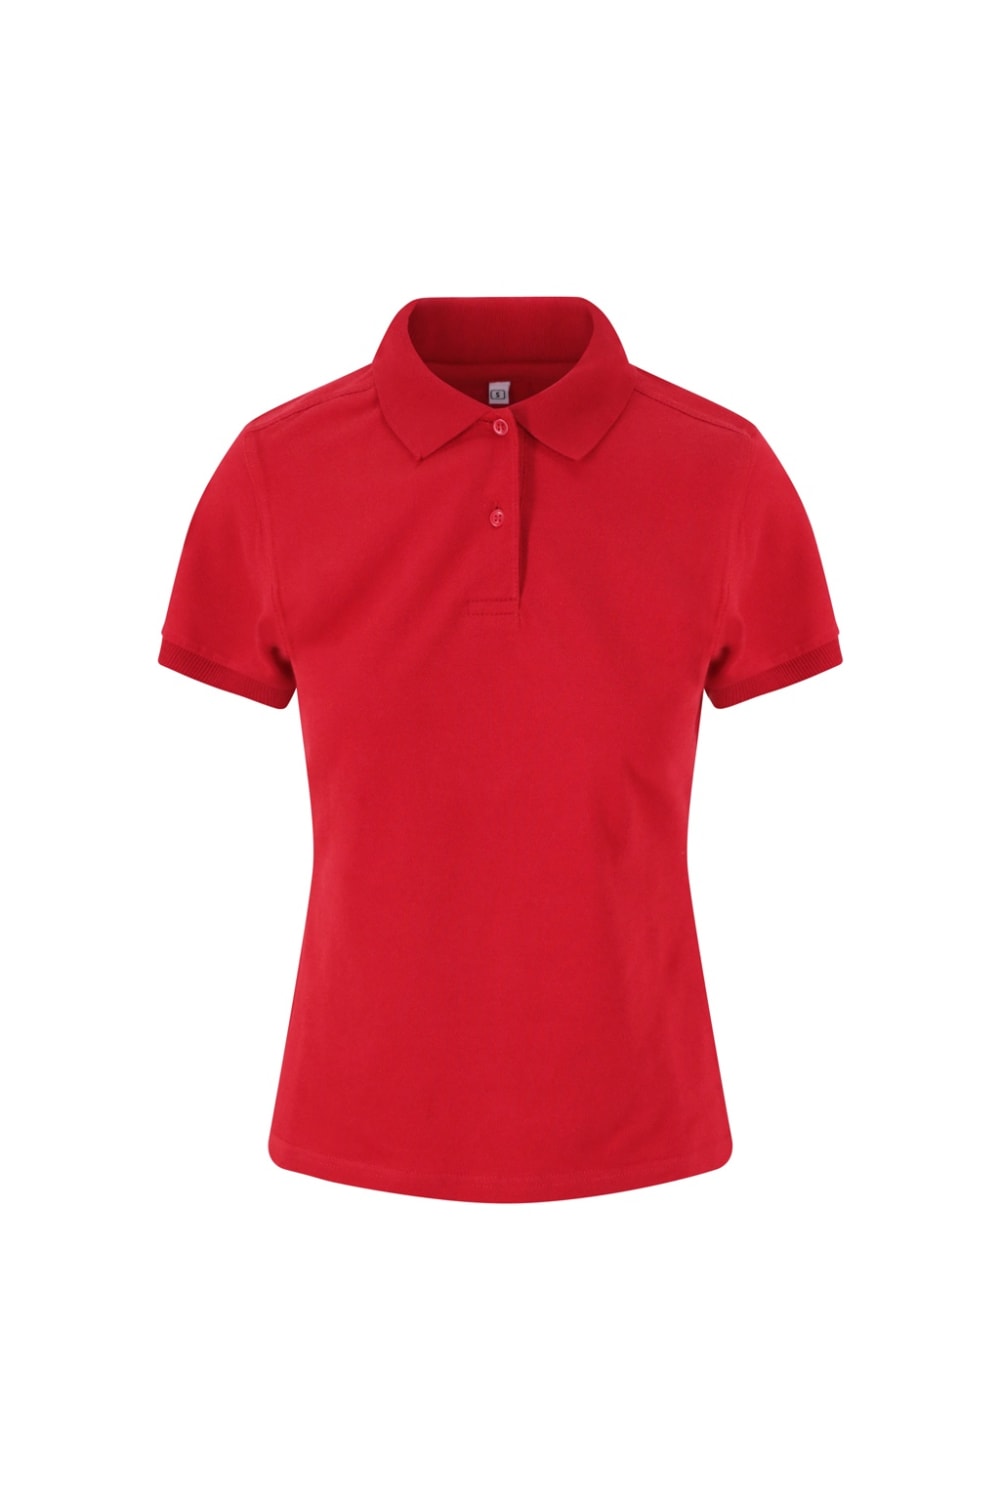 Just Polos Womens Girlie Stretch Pique Polo Shirt - Red